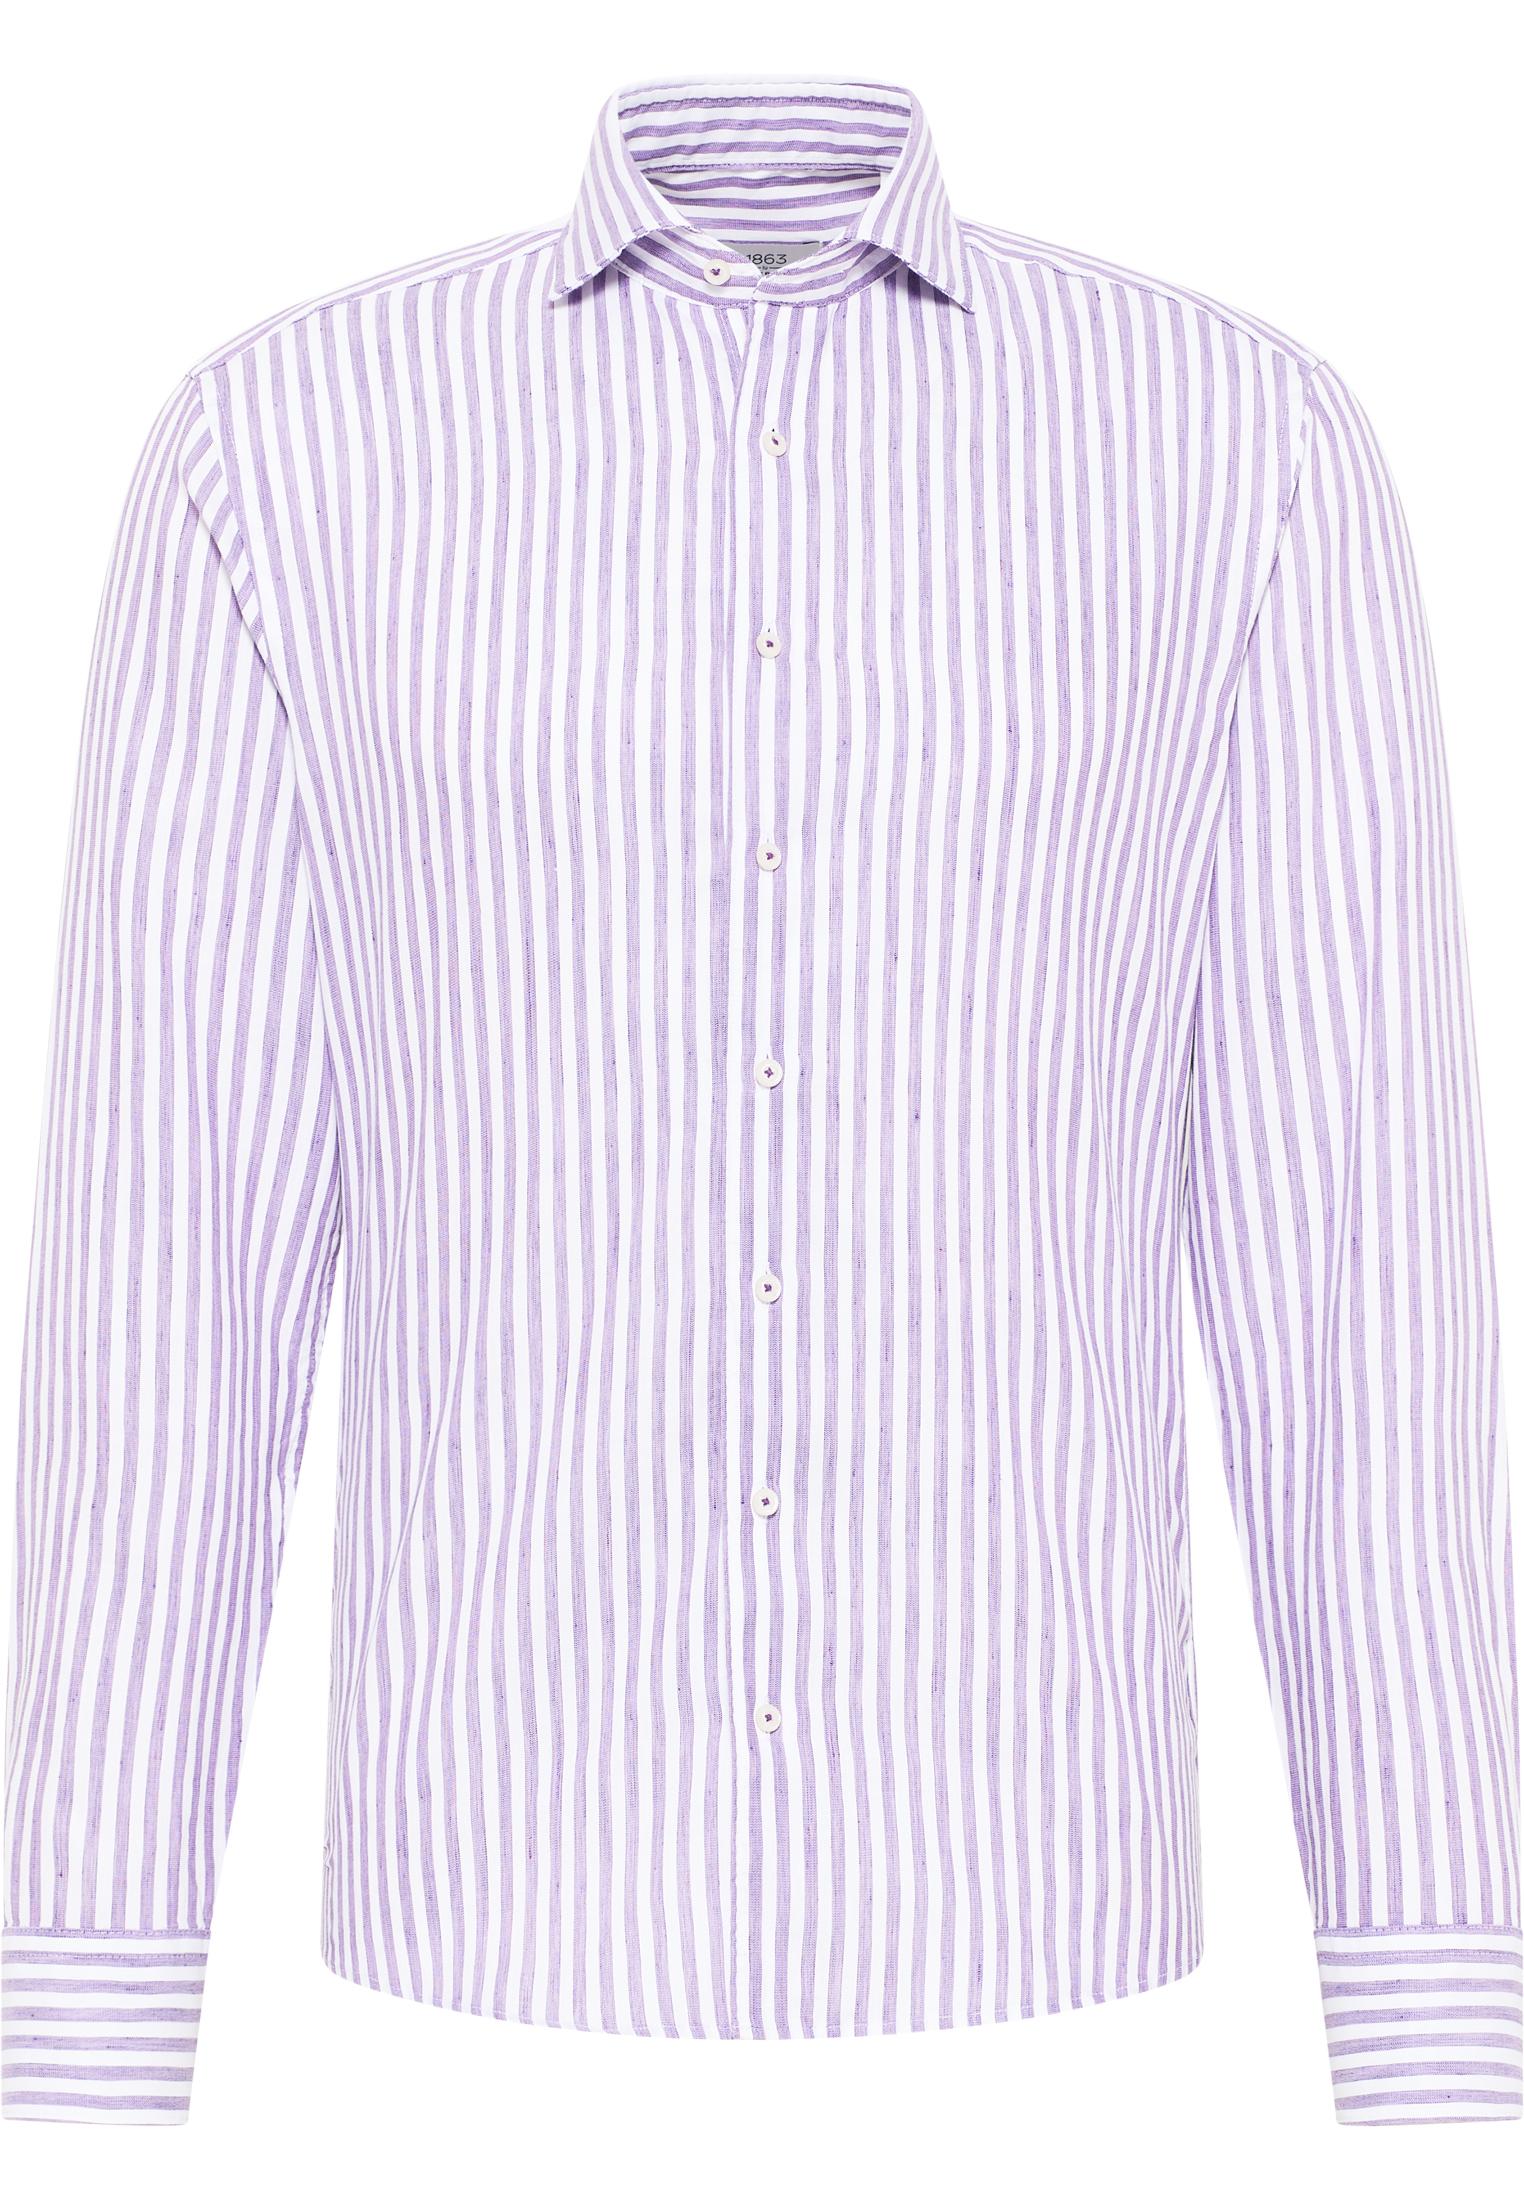 SLIM FIT Shirt in plum striped